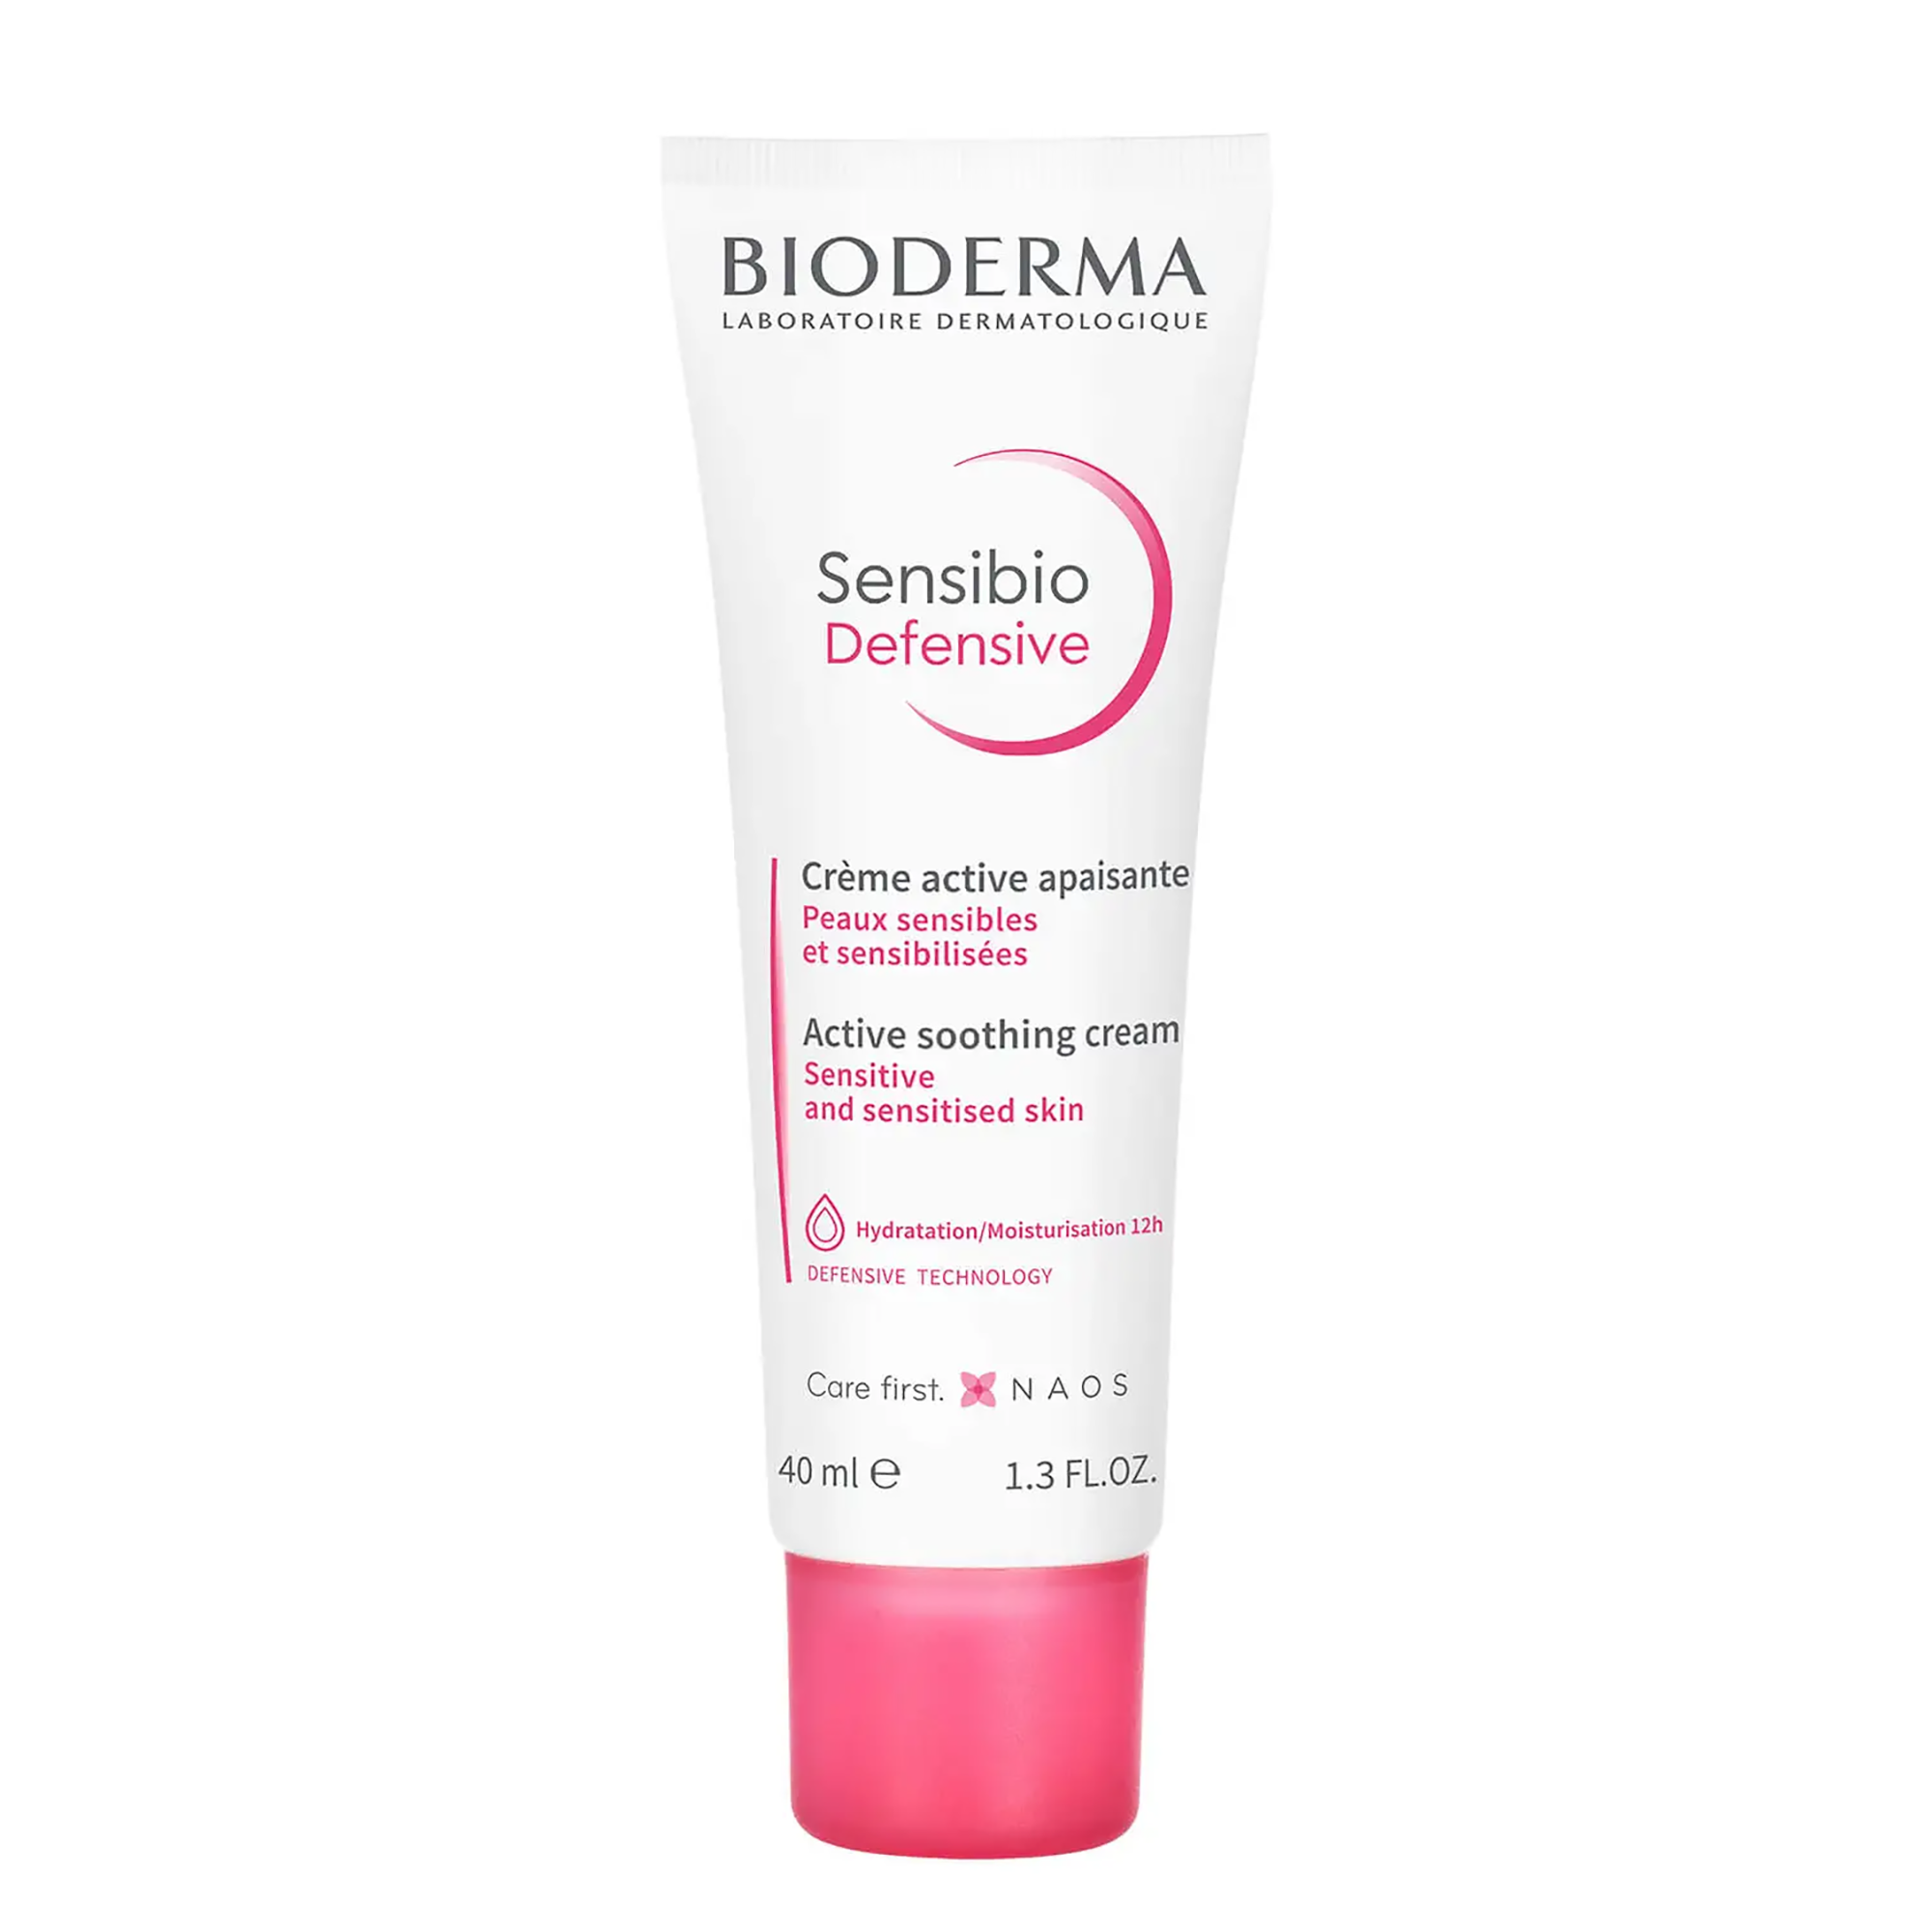 Bioderma Sensibio Defensive Cream - 1.3 fl oz / 1.3OZ